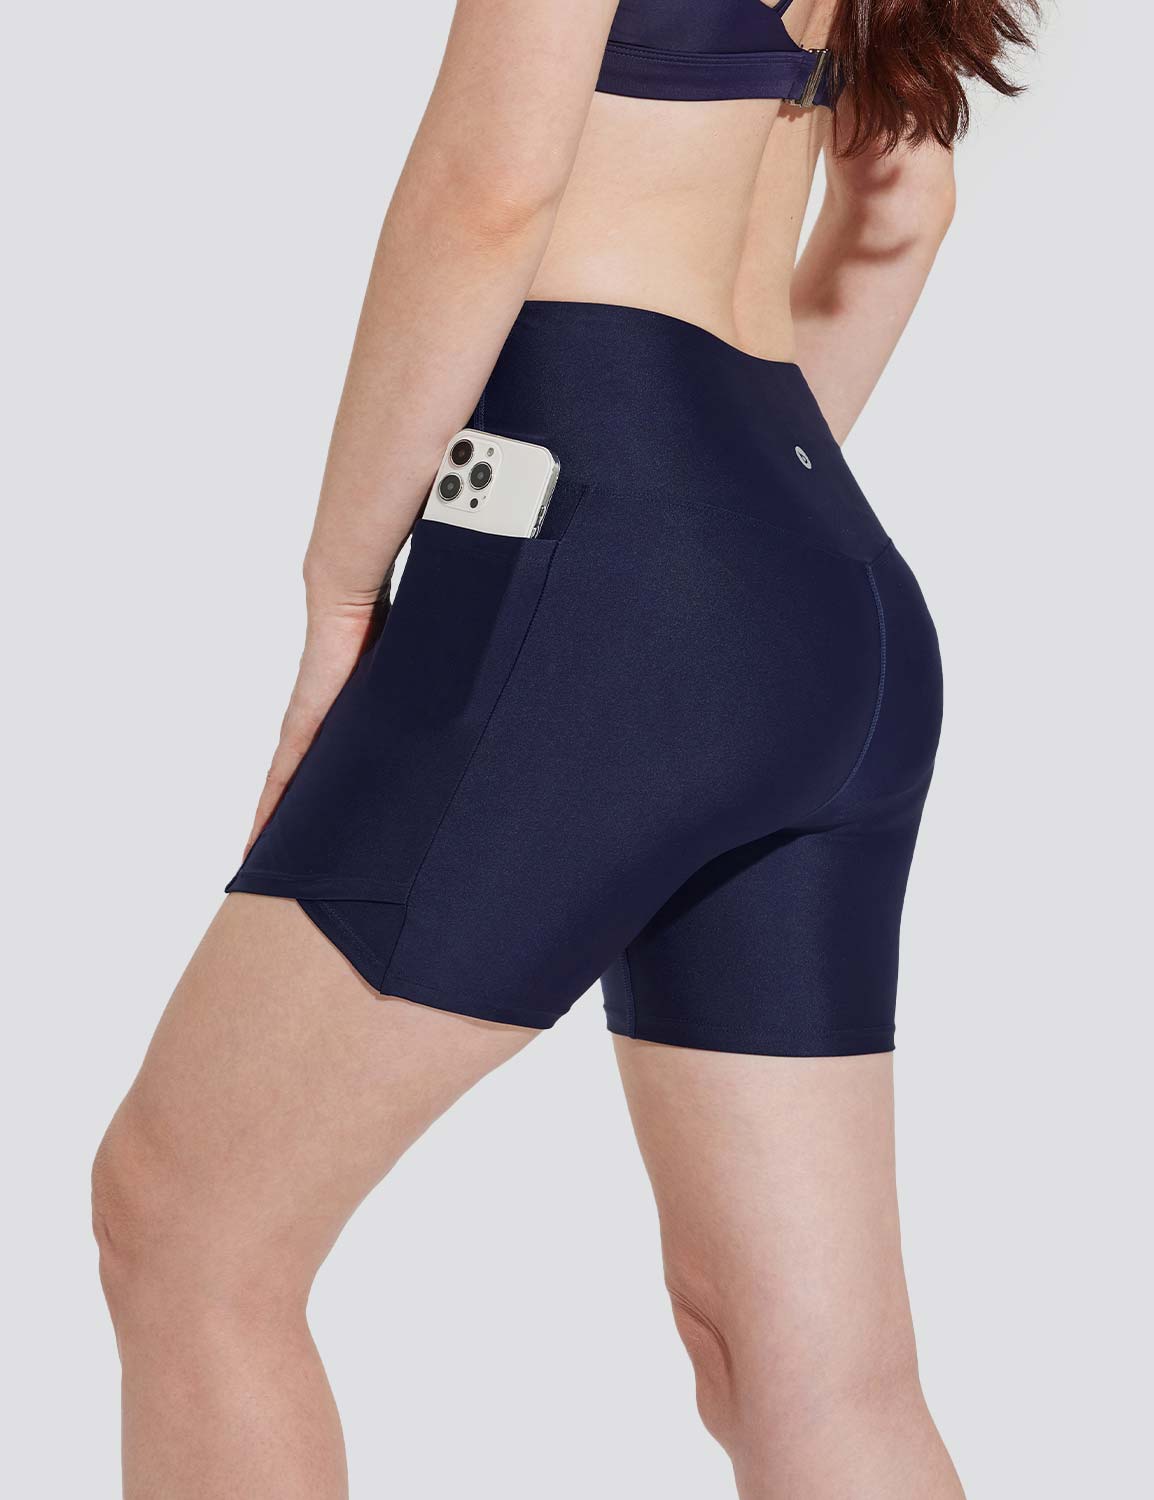 Baleaf Women's Quick Dry Pocket Casual Swim Shorts Peacoat Side